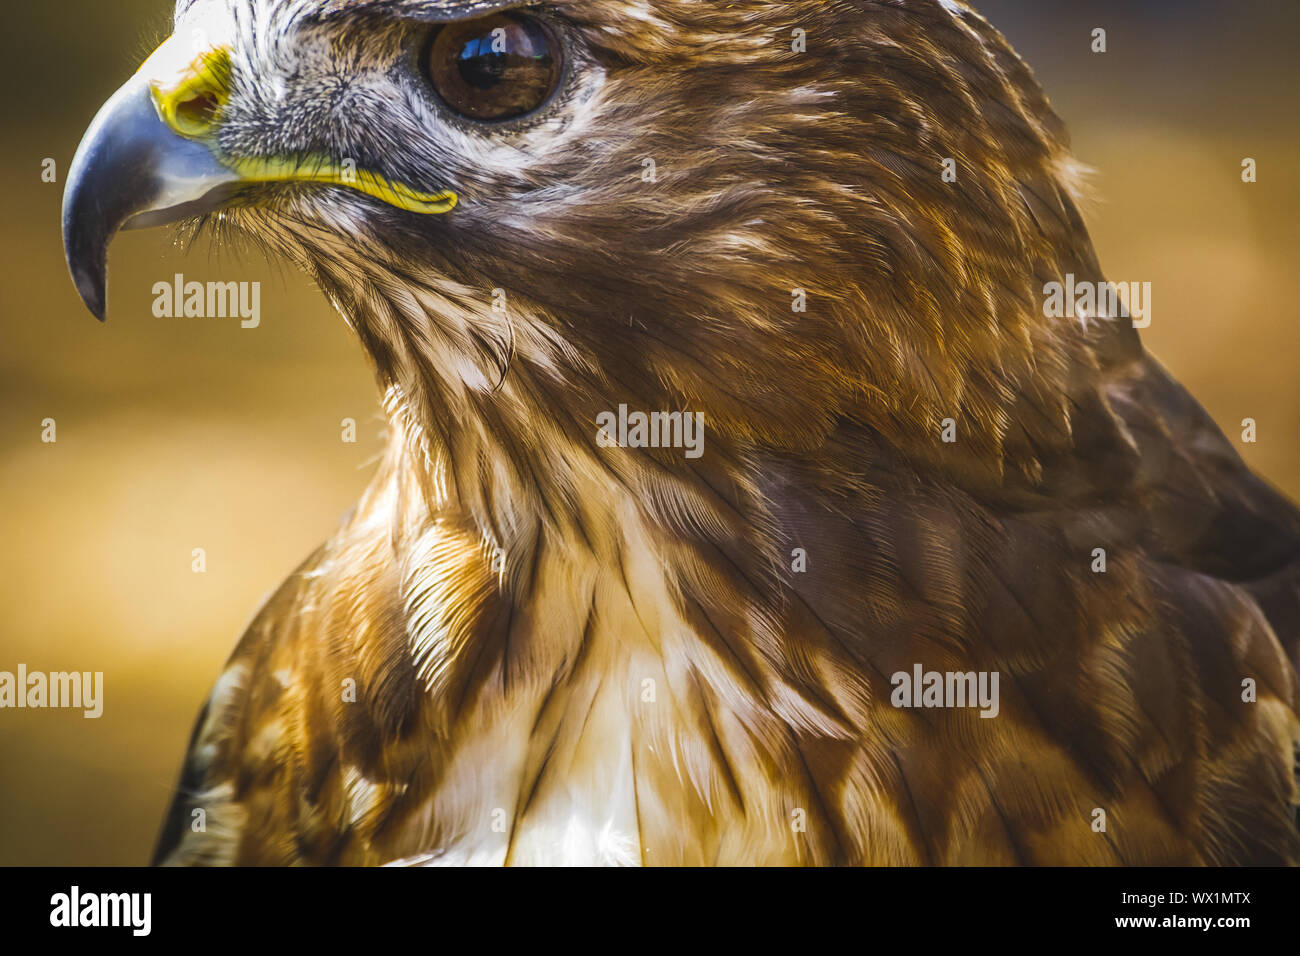 eagle, diurnal bird of prey with beautiful plumage and yellow beak Stock Photo